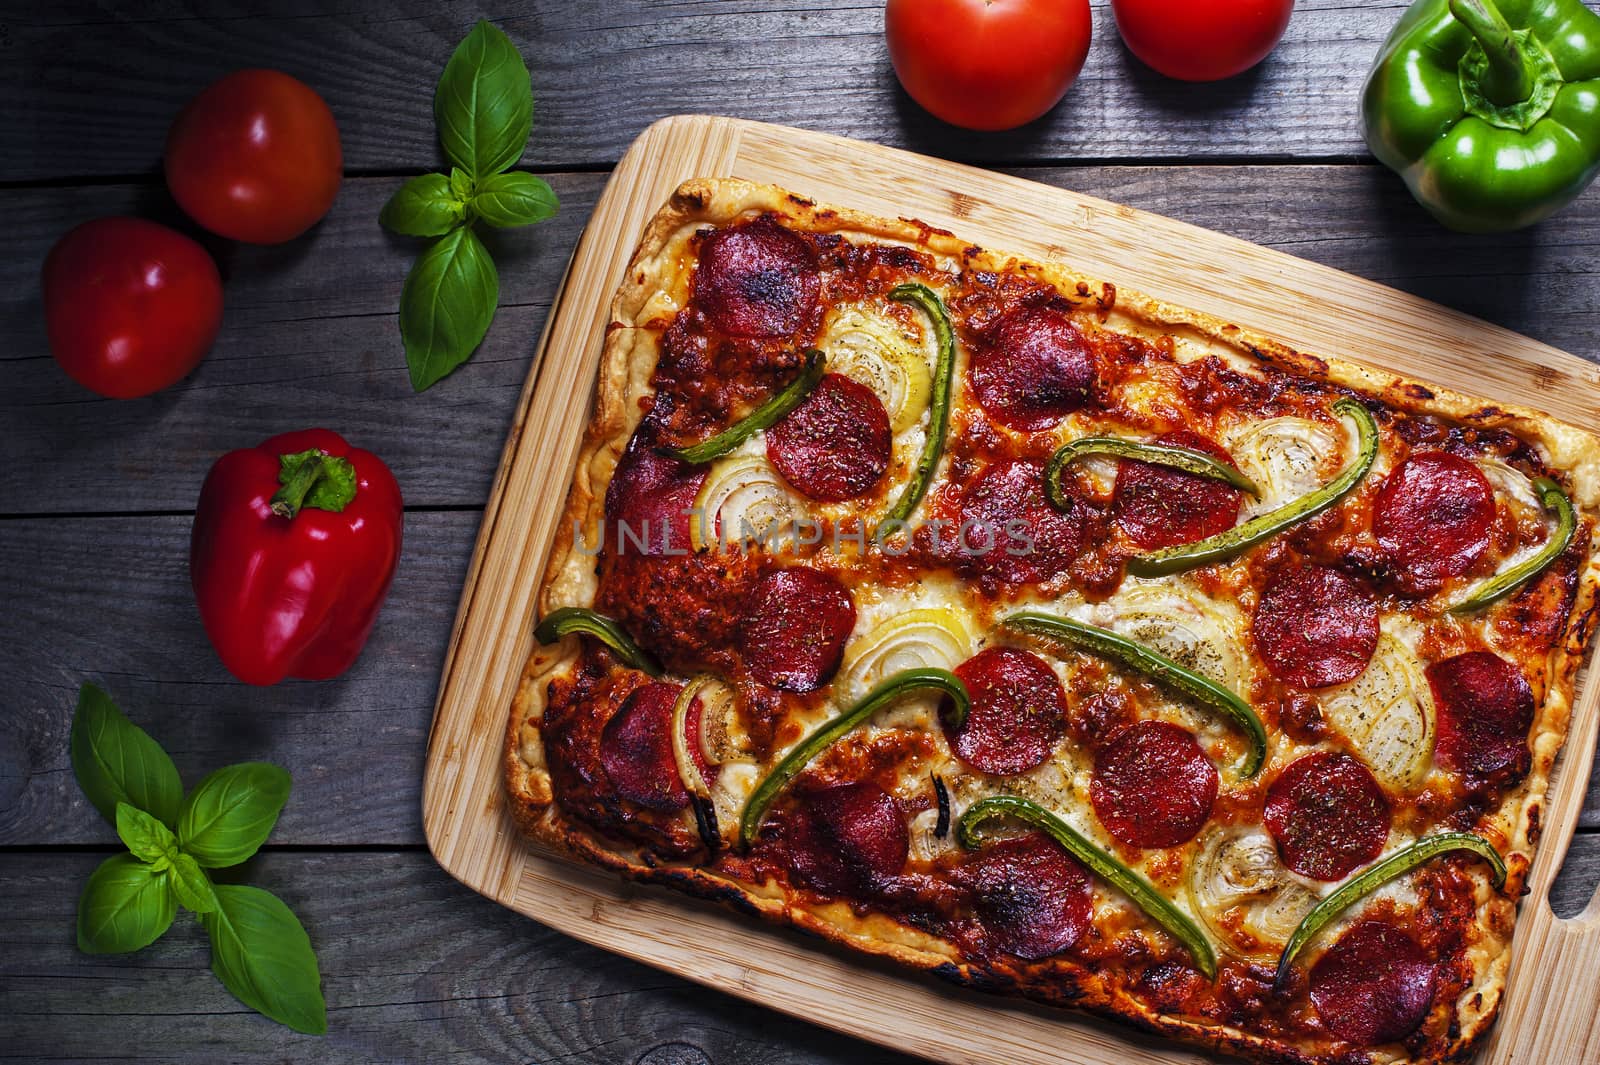 Italian homemade pizza by Michalowski